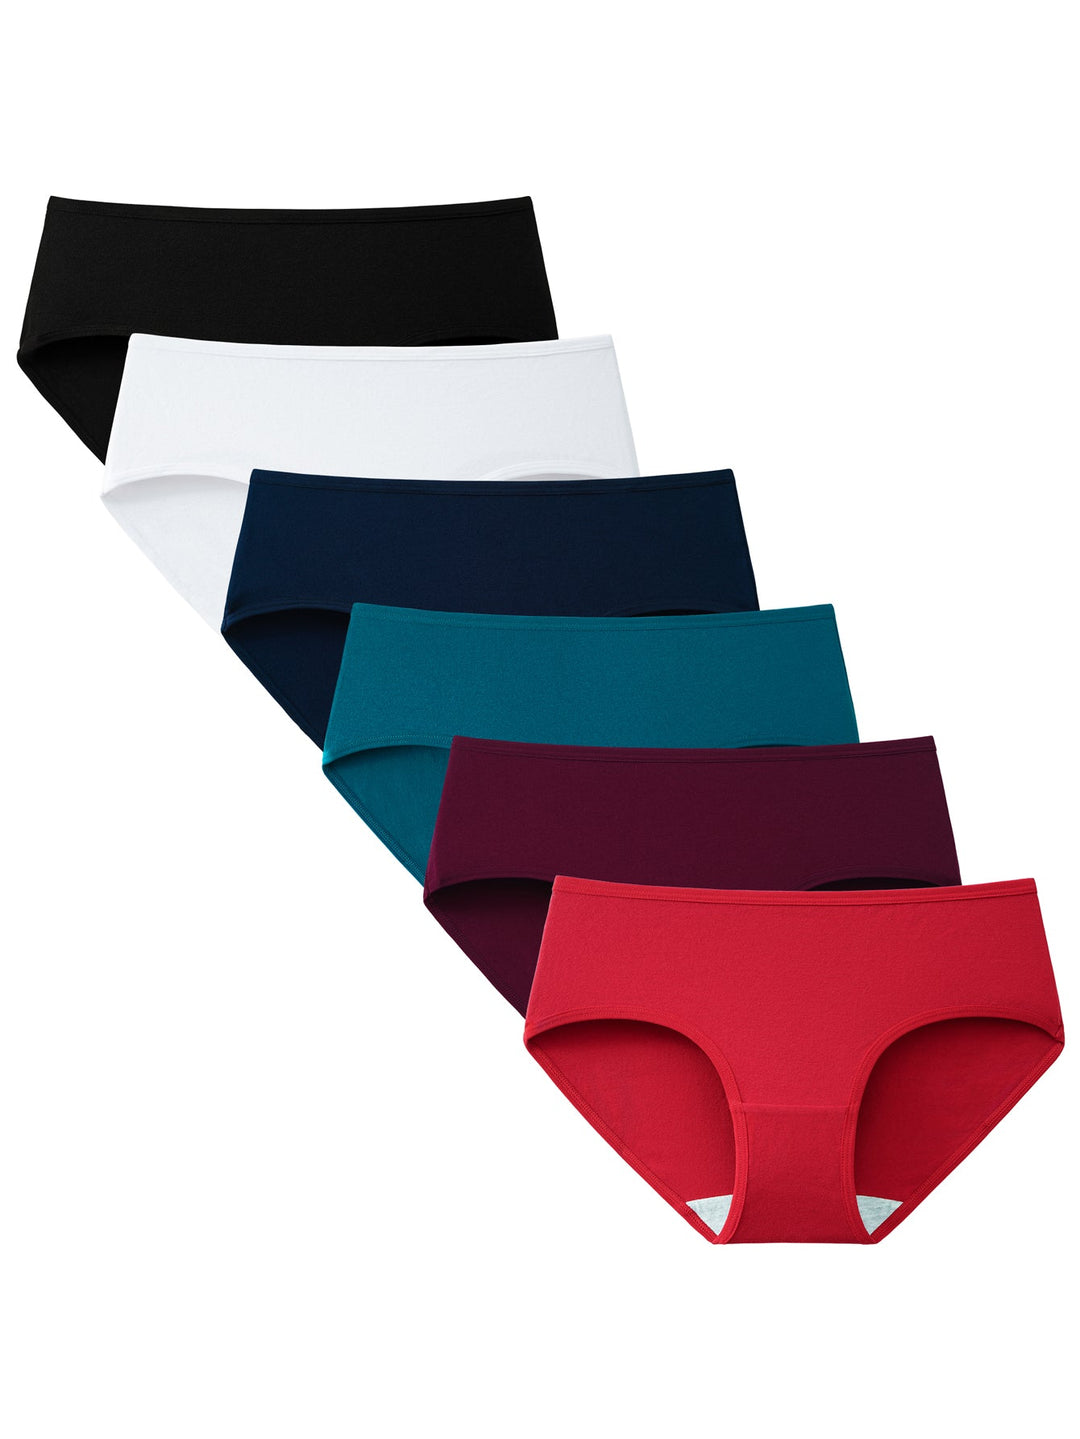 Womens Underwear Cotton Hipster Panties Regular & Plus Size 6-Pack